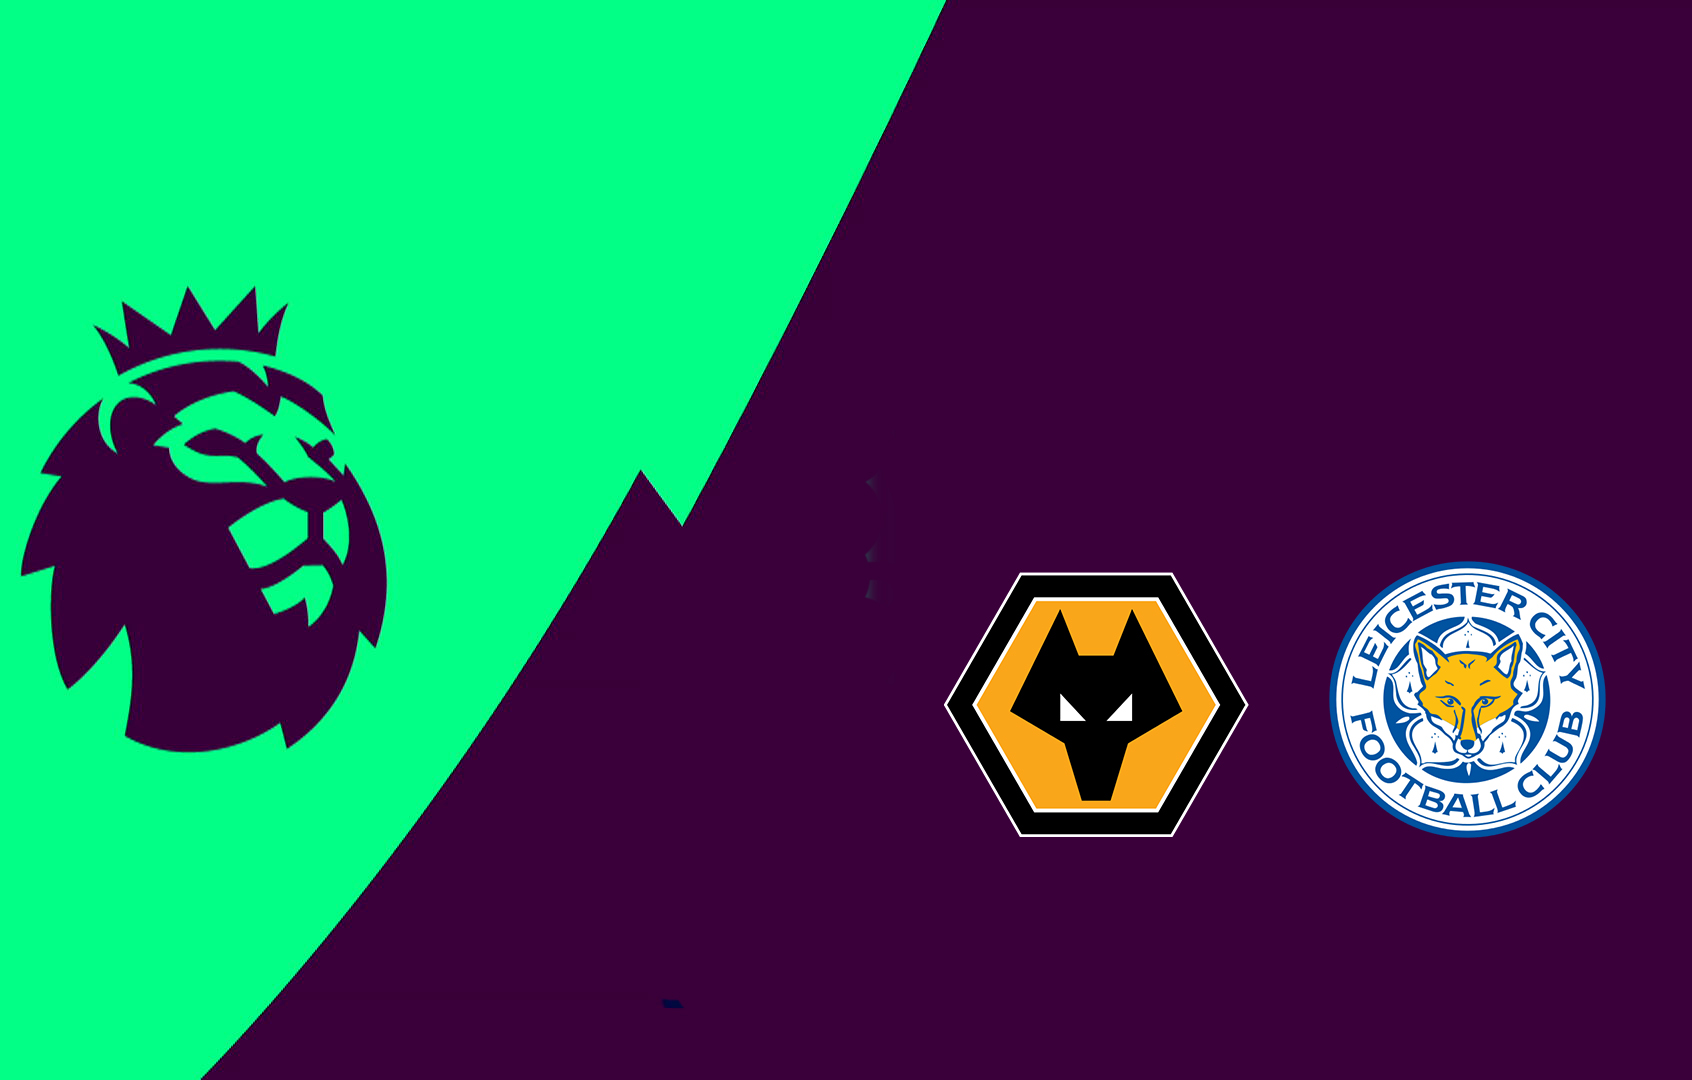 soi-keo-ca-cuoc-bong-da-ngay-9-2-Wolverhampton-vs-Leicester City-do-it-thang-do-nhieu-b9 1